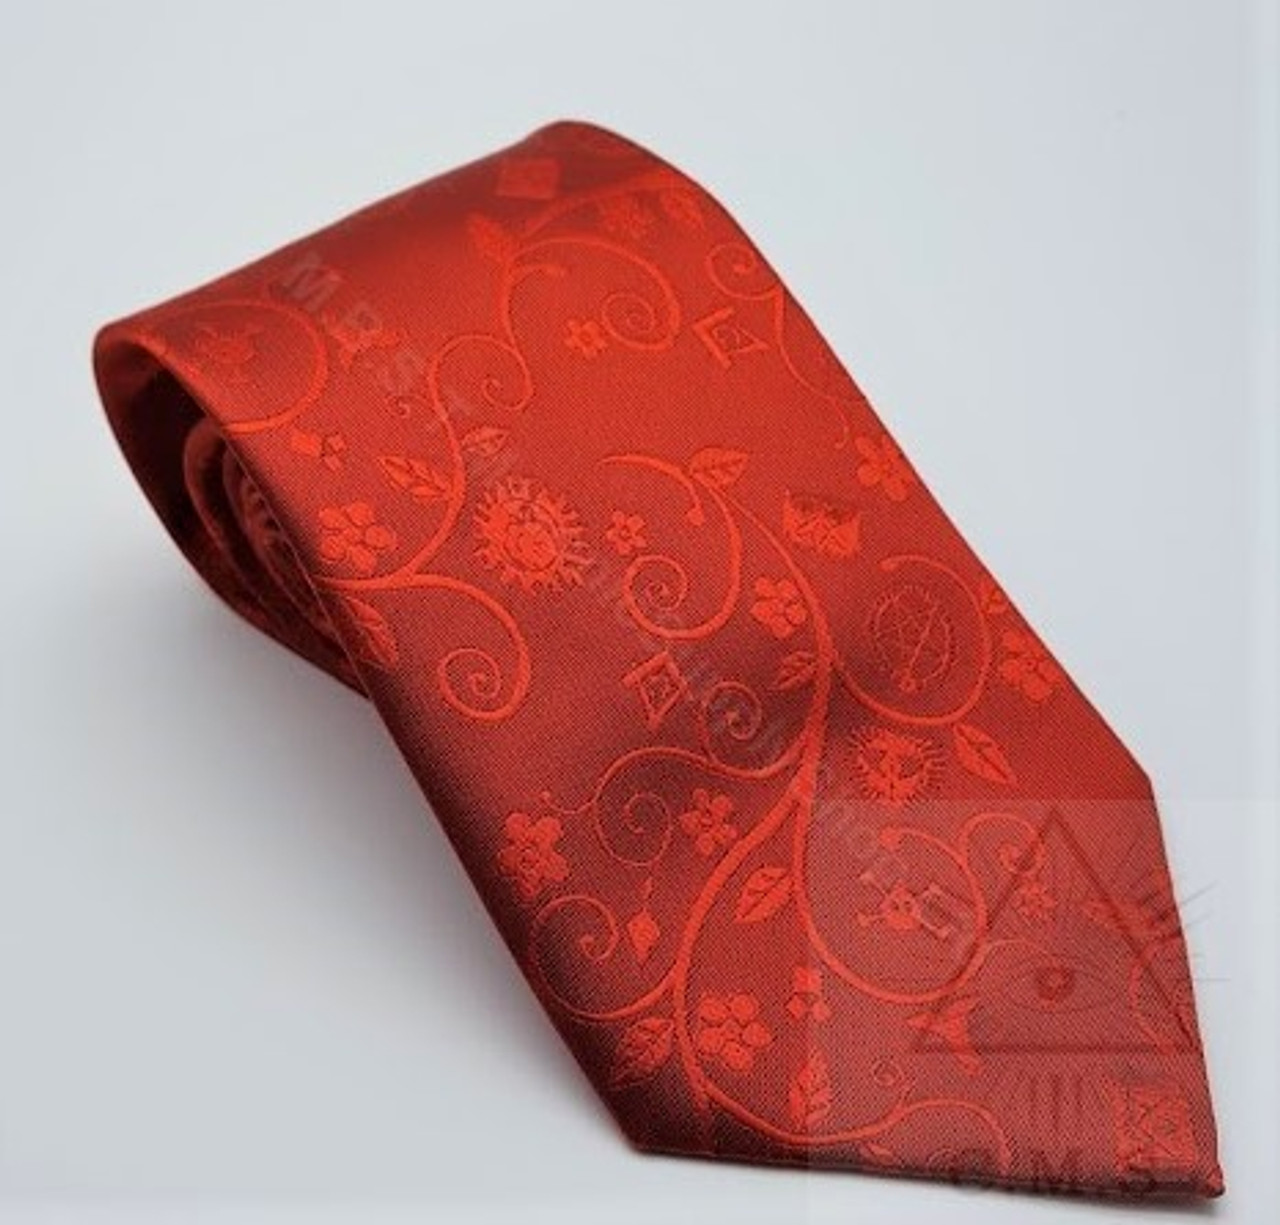 Masonic Tie Dark Red with Wreath Design - Masonic Supply Shop